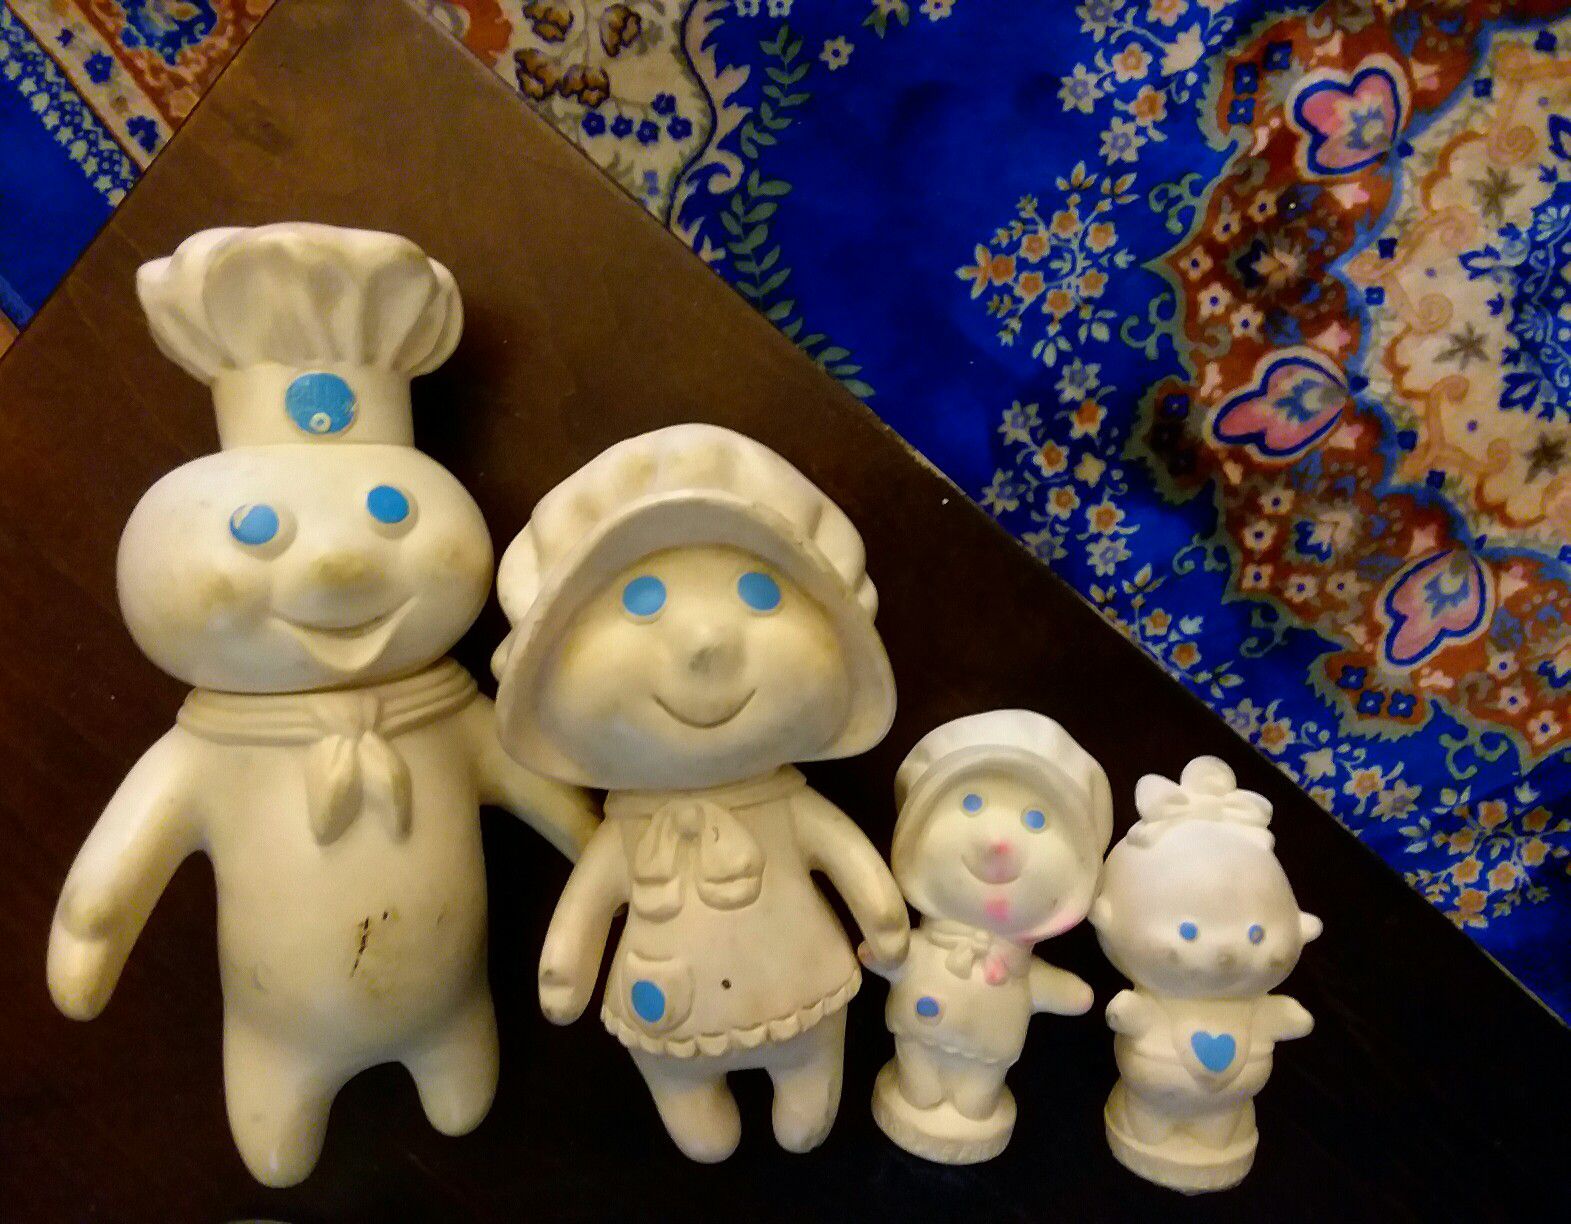 The Pillsbury Dough Family made in 1971